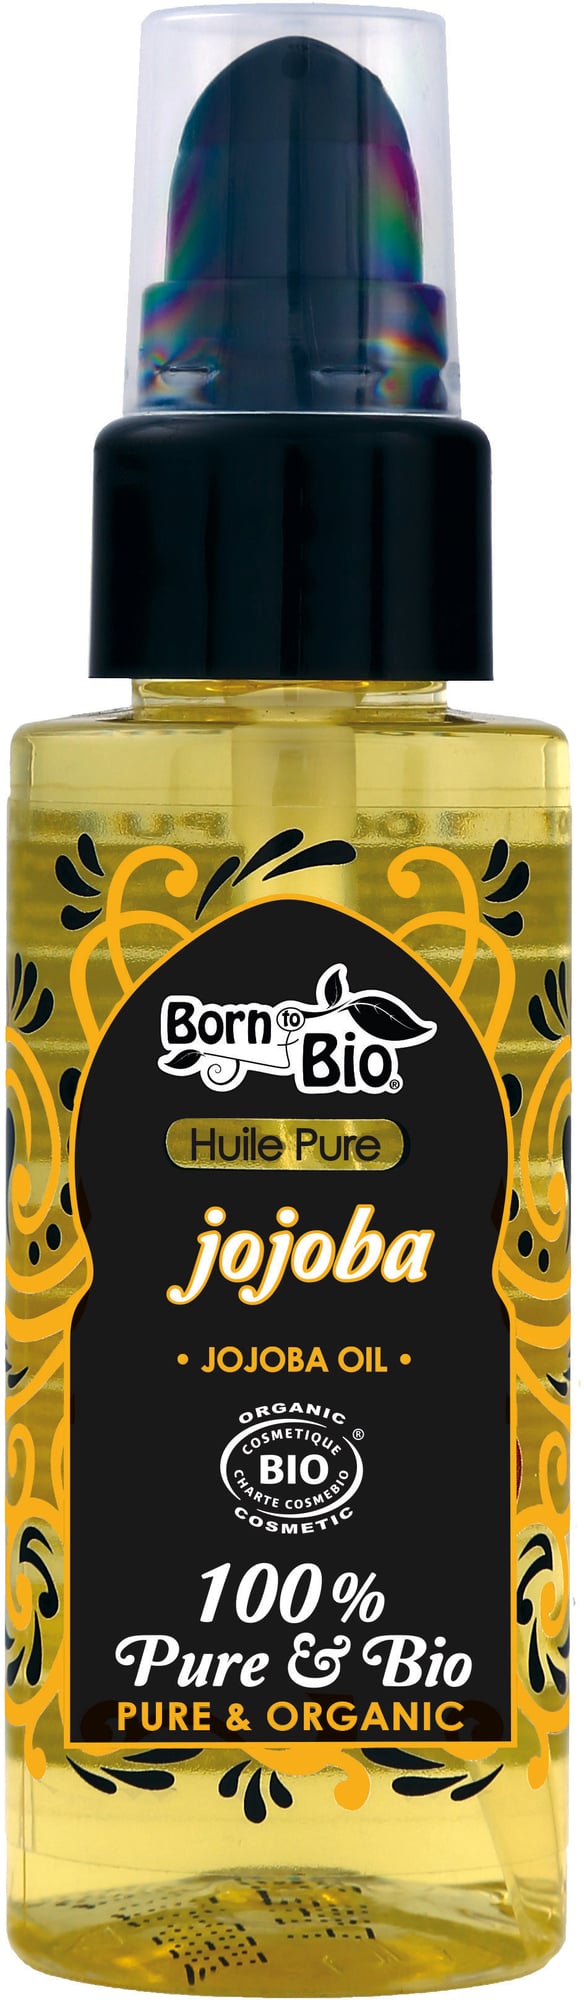 Born to Bio Organic Jojoba Oil